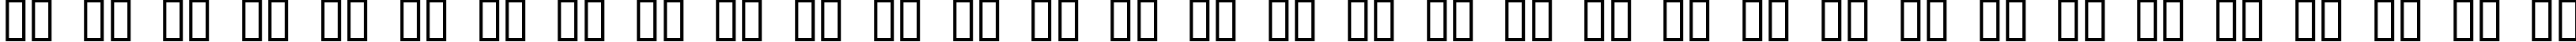 Пример написания русского алфавита шрифтом Blazed